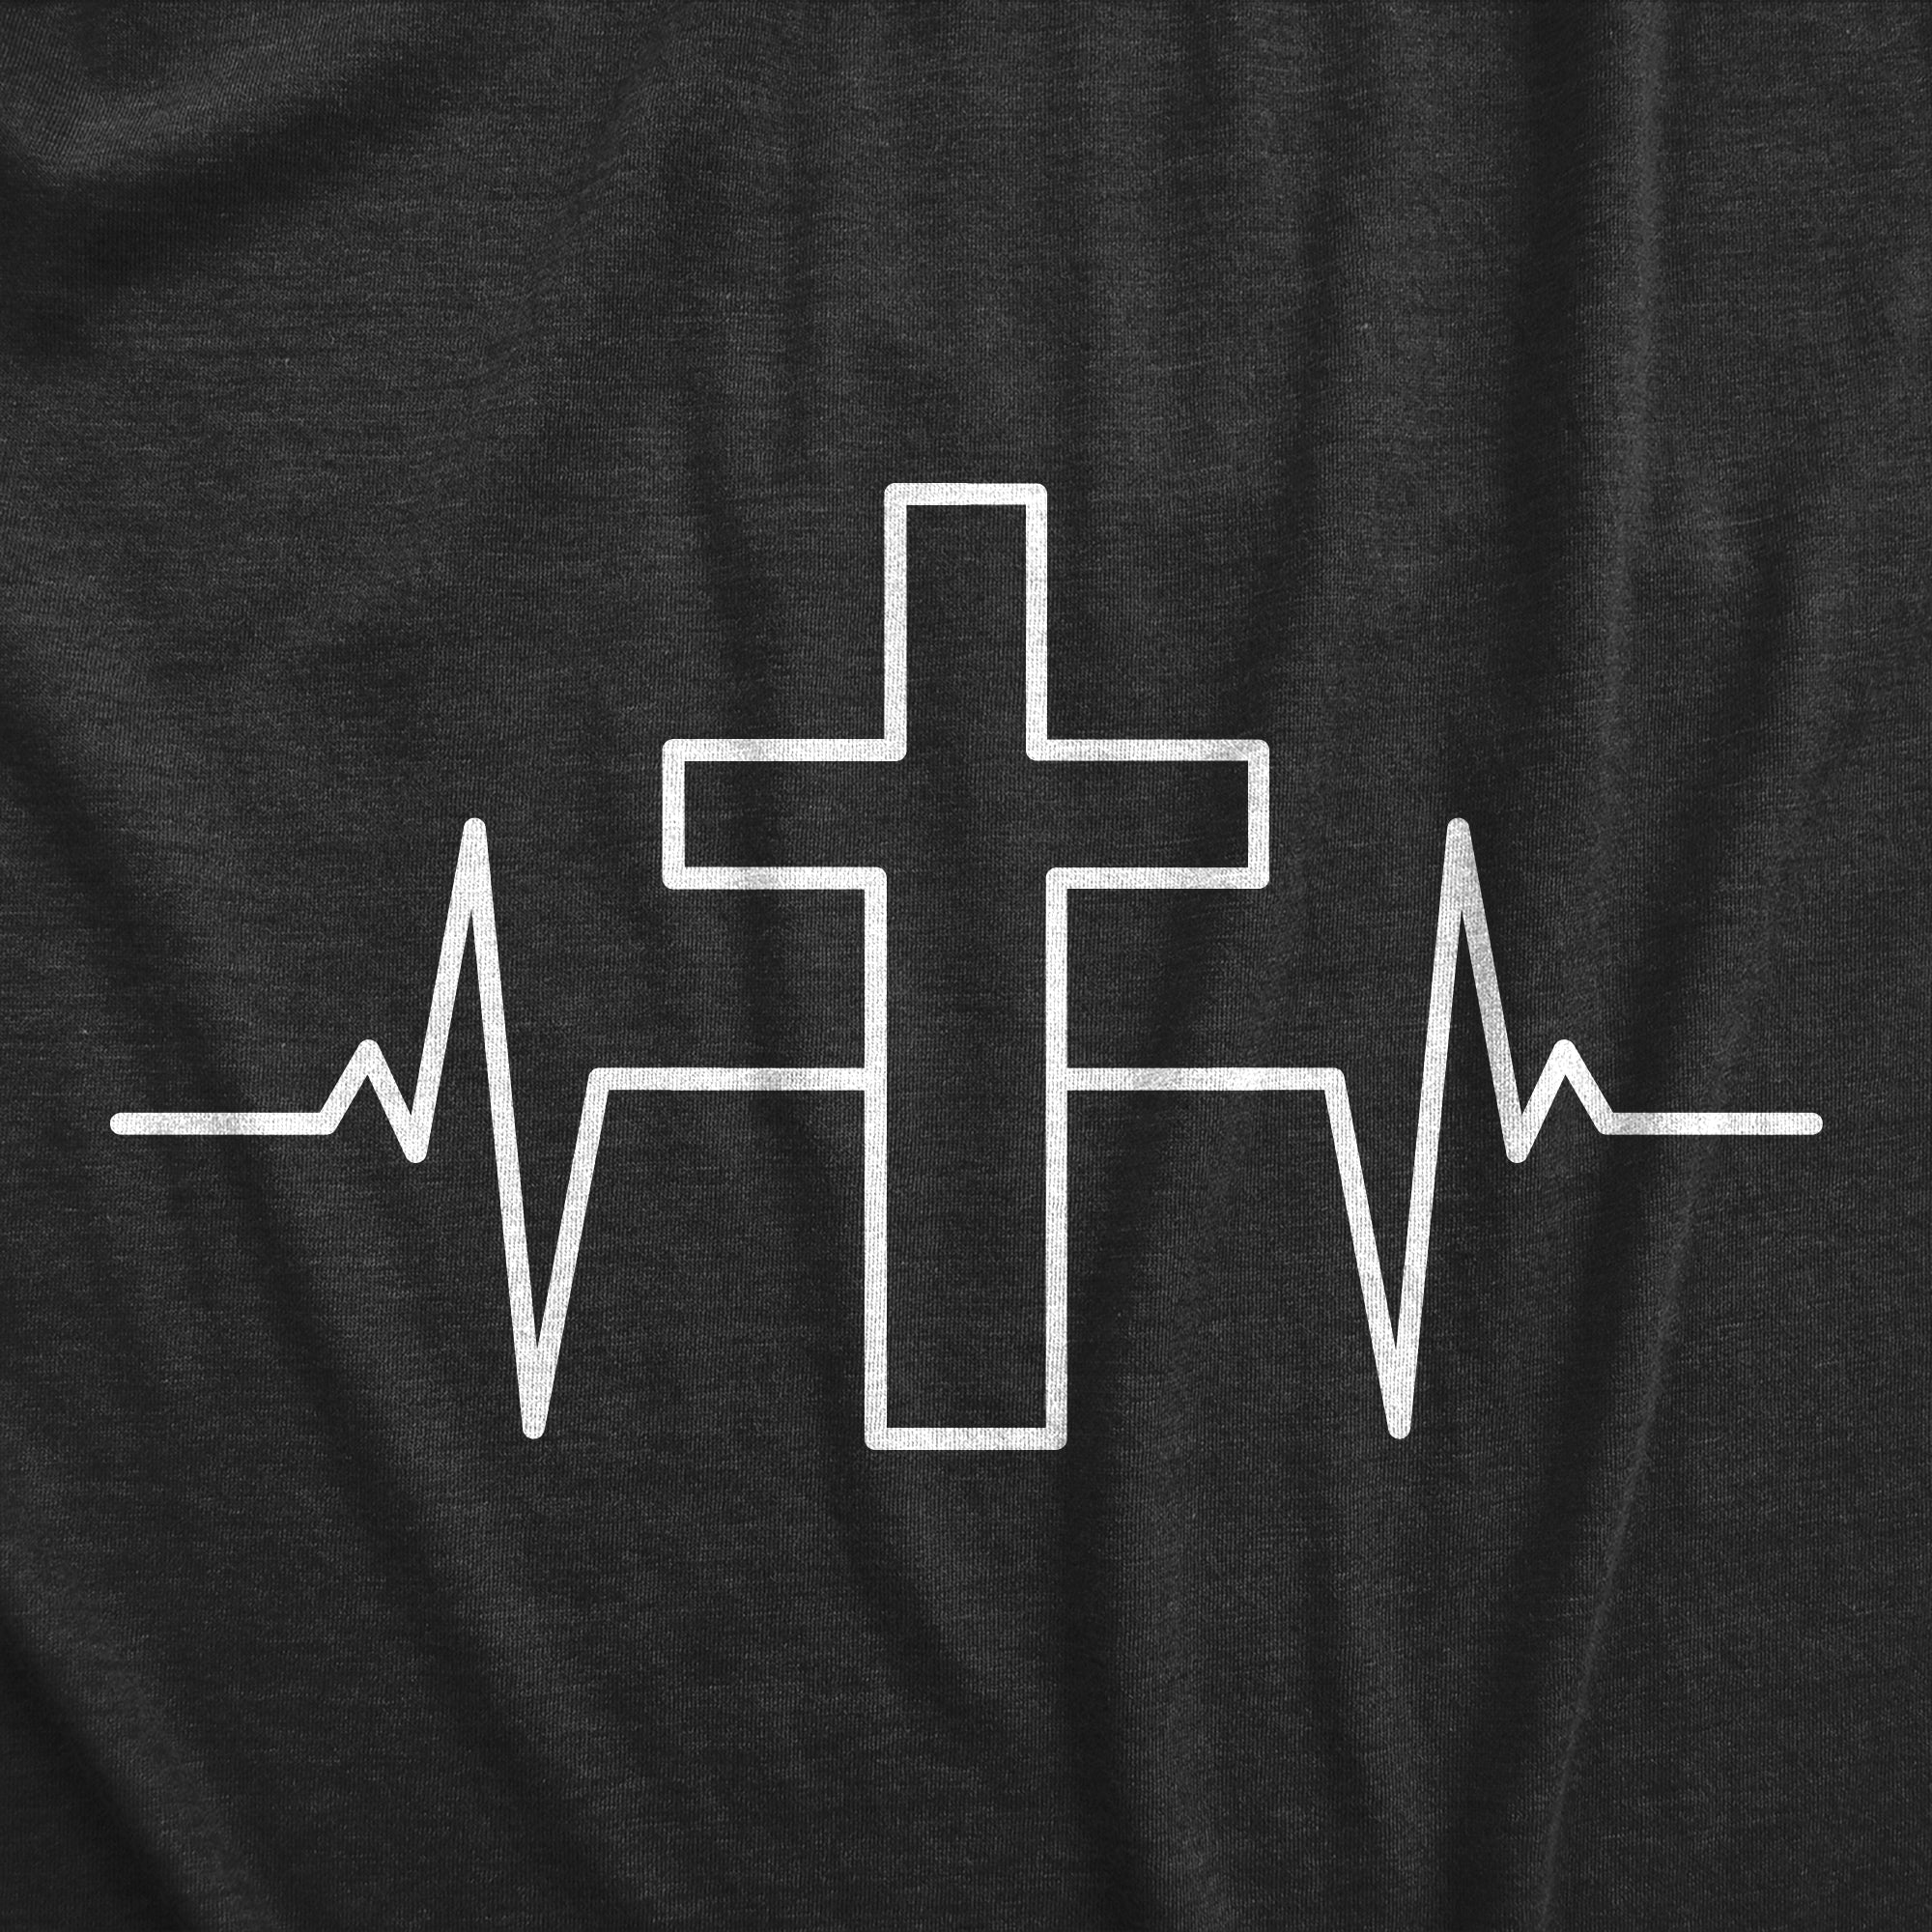 Funny Heather Black Cross Heart Beat Mens T Shirt Nerdy Easter Religion Tee